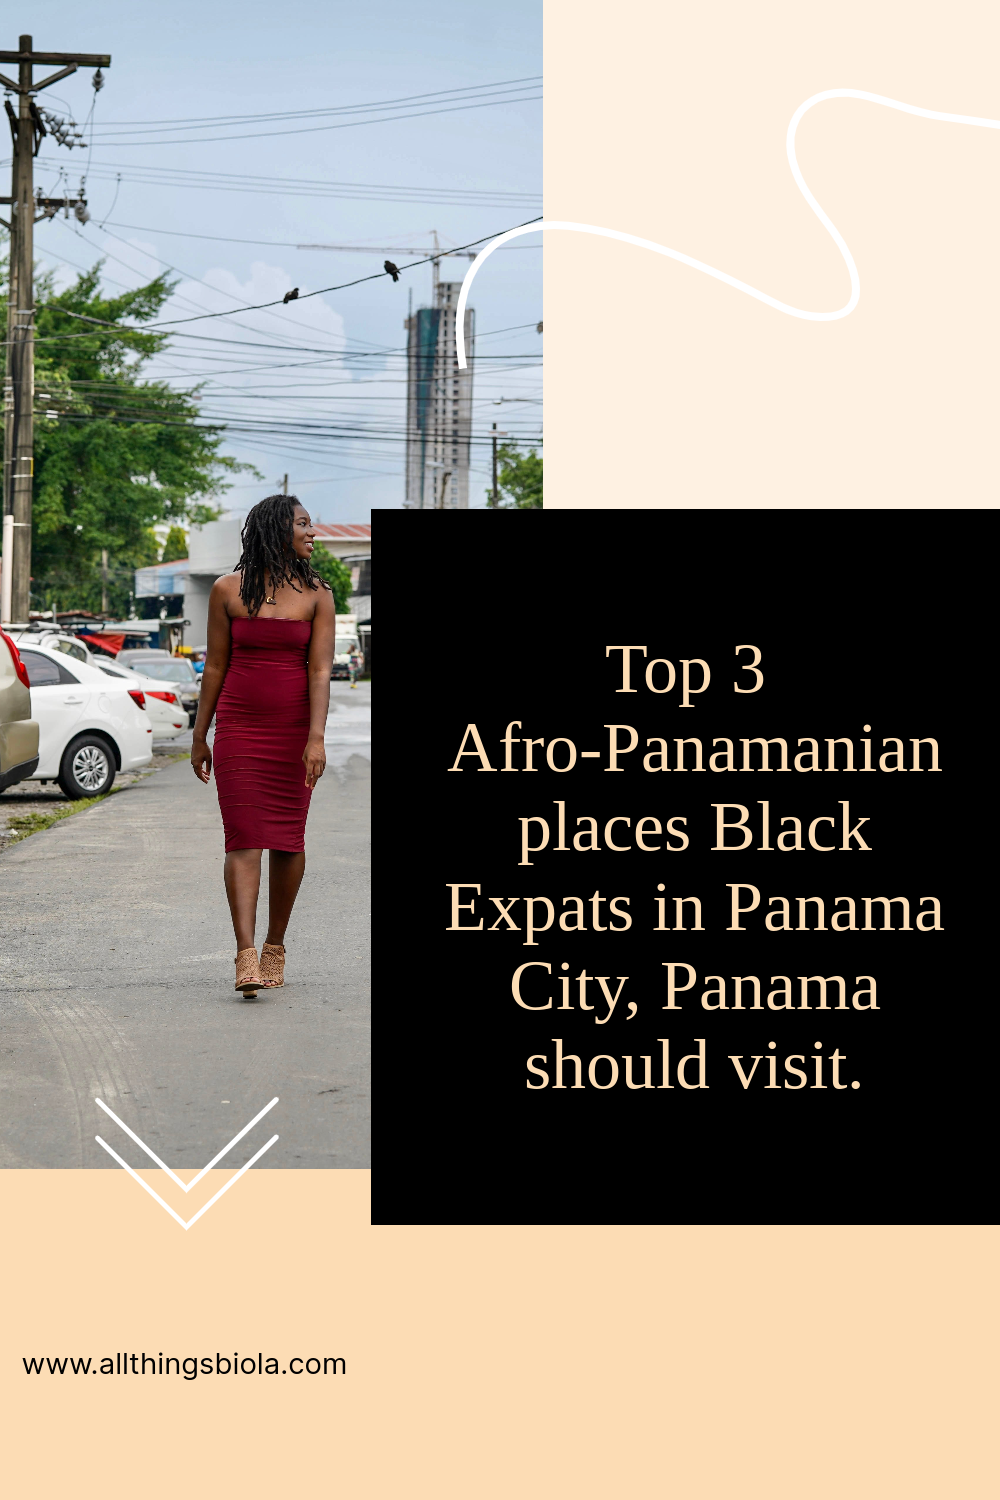 Top 3 Afro-Panamanian Places Black Expats in Panama City, Panama Should Visit.